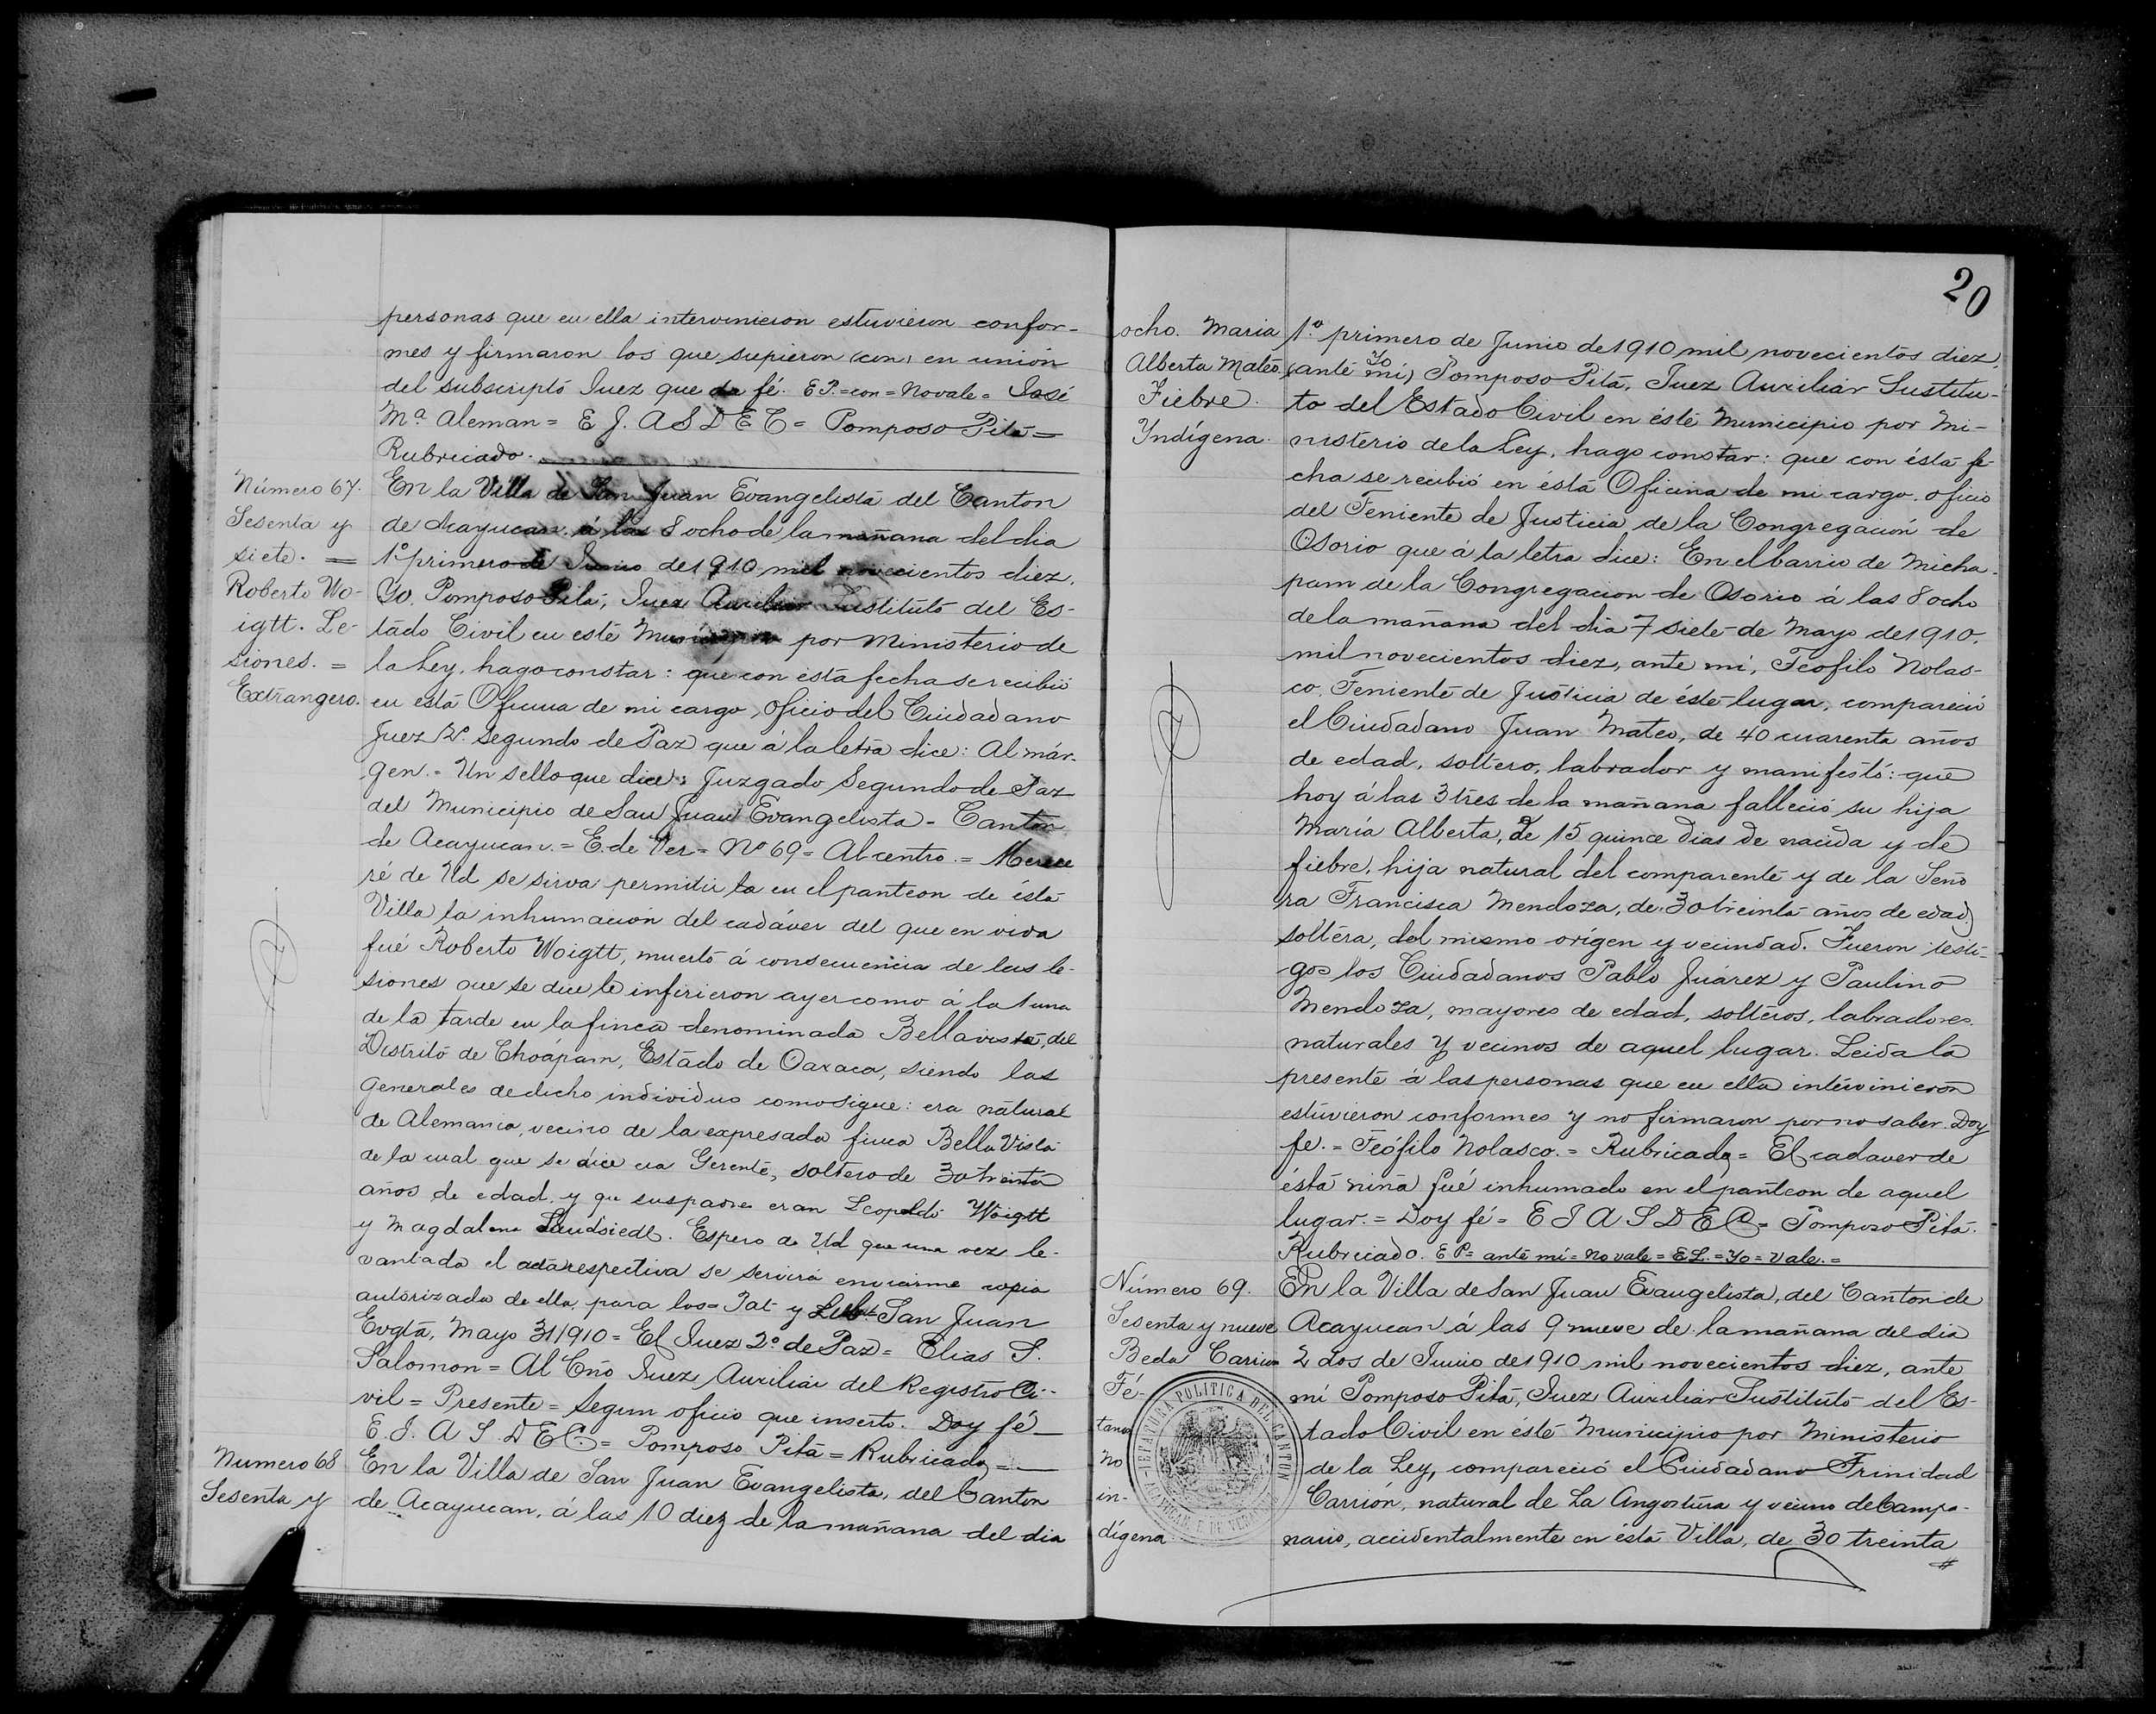 Civil Death Registration, San Juan Evangelisa, Veracruz-Llave, México, 1910